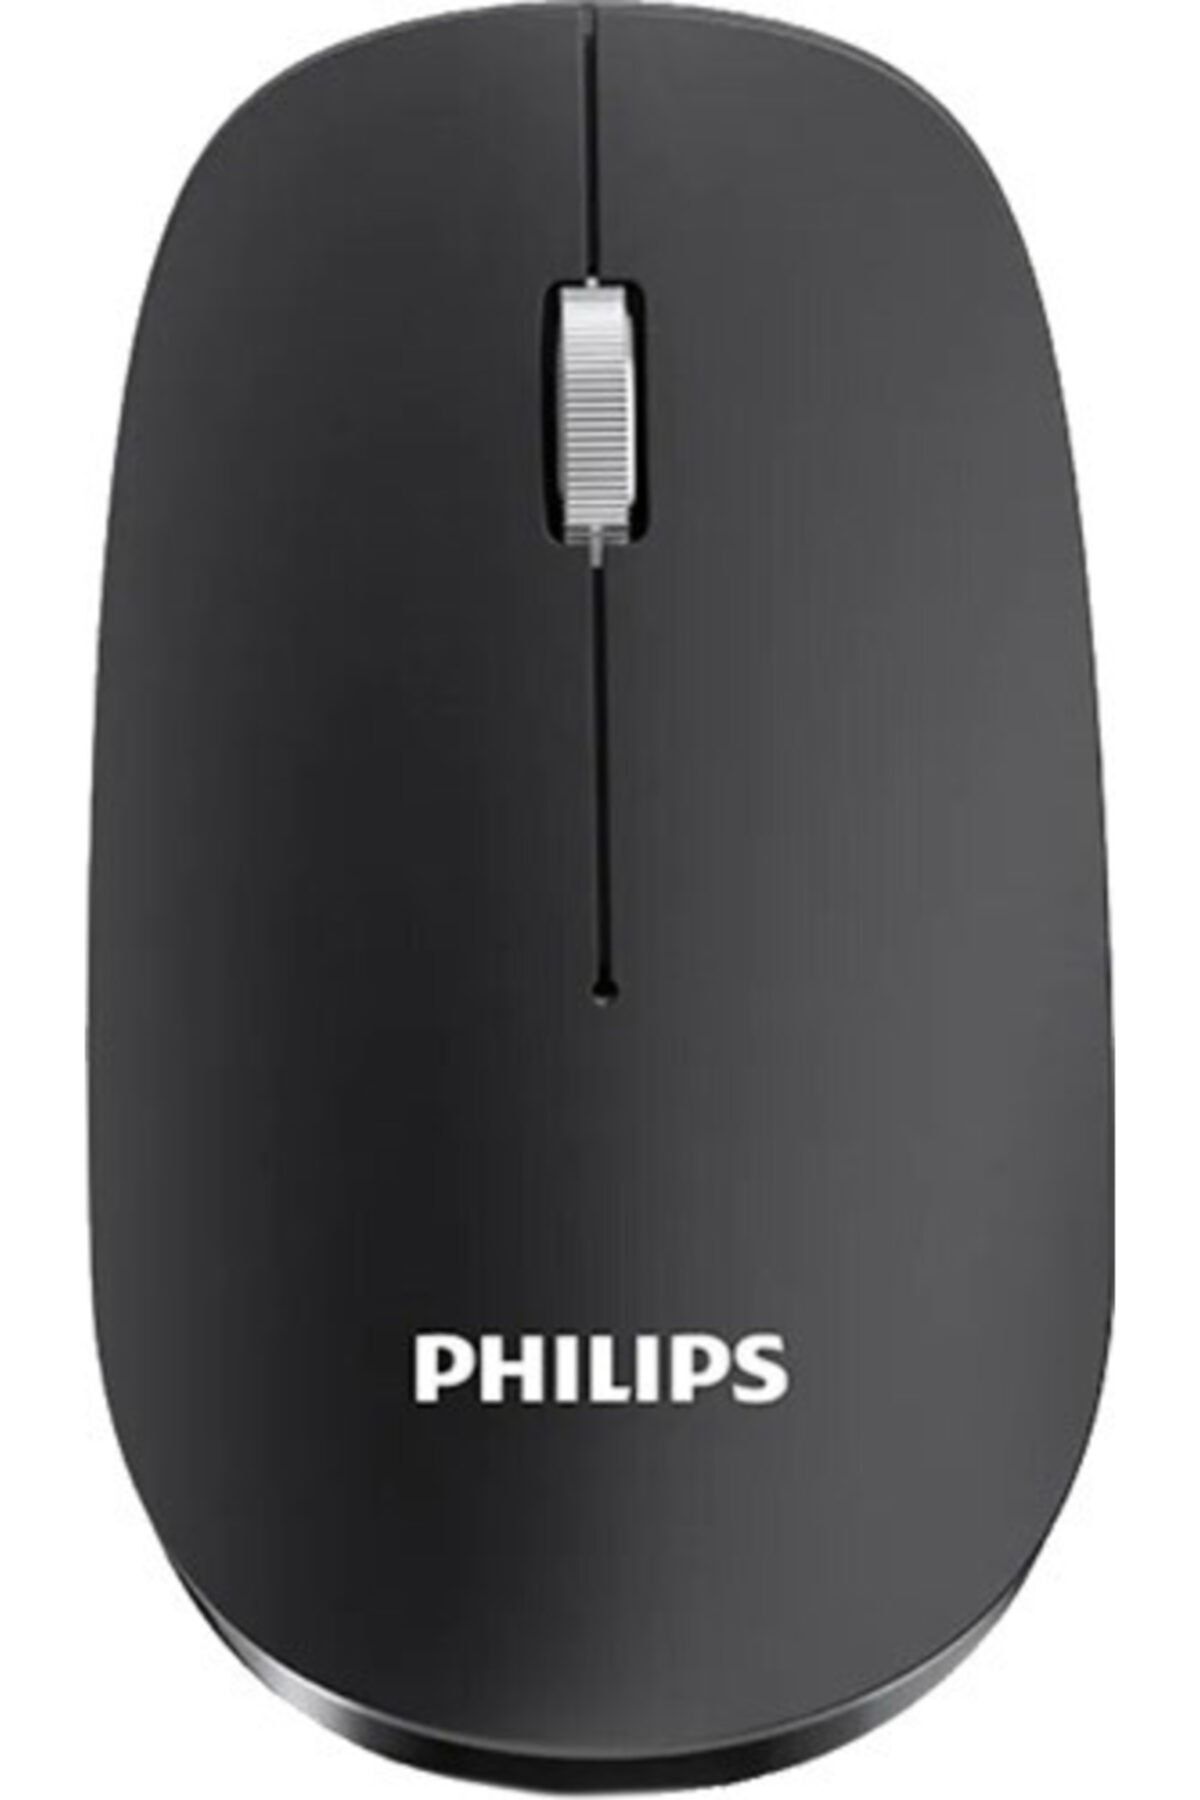 Philips Phılıps M305 Kablosuz Mouse Wireless Mouse 2.4 Ghz Siyah